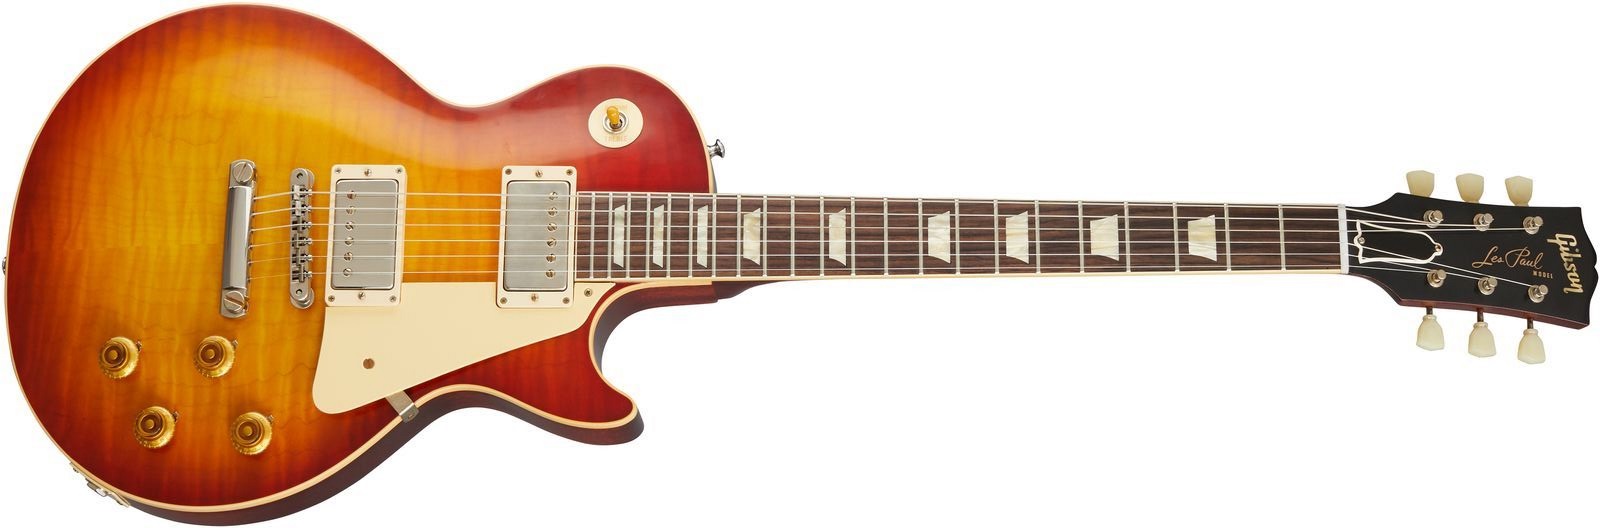 Gibson CS 1959 Les Paul Standard Reissue VOS Washed Cherry Sunburst